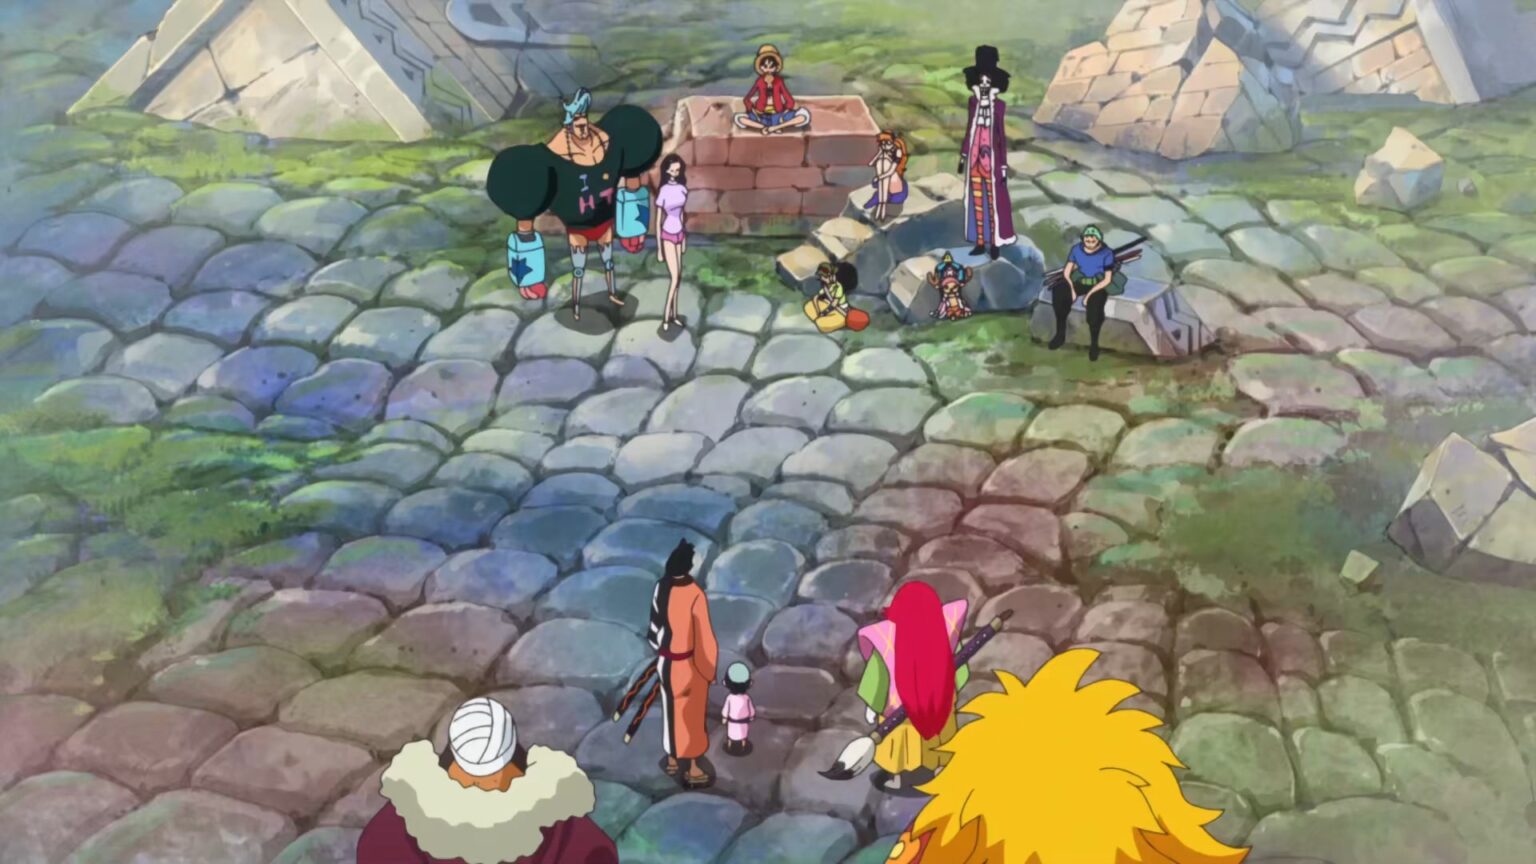 One Piece the Straw Hats and Kozuki clan members